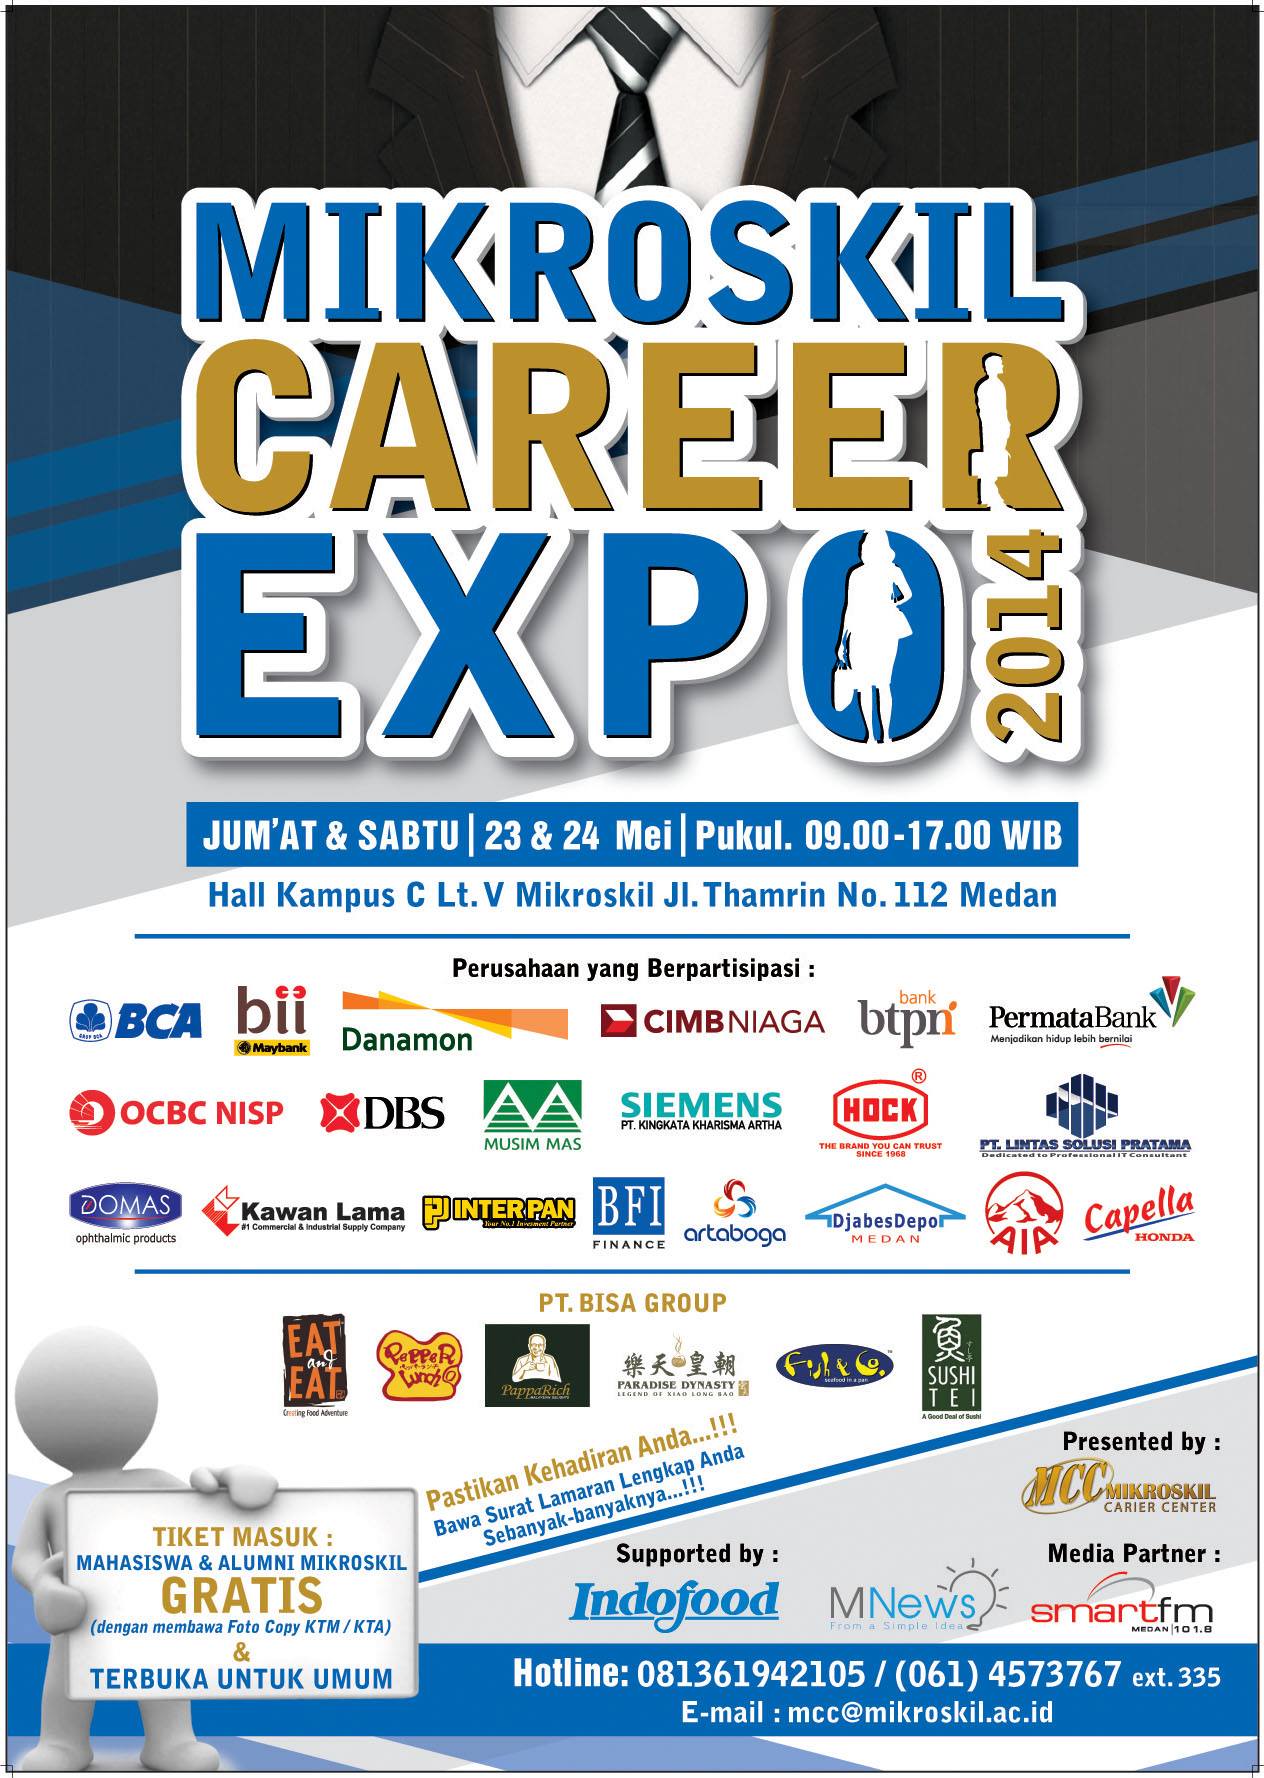 Mikroskil Career Expo 2014